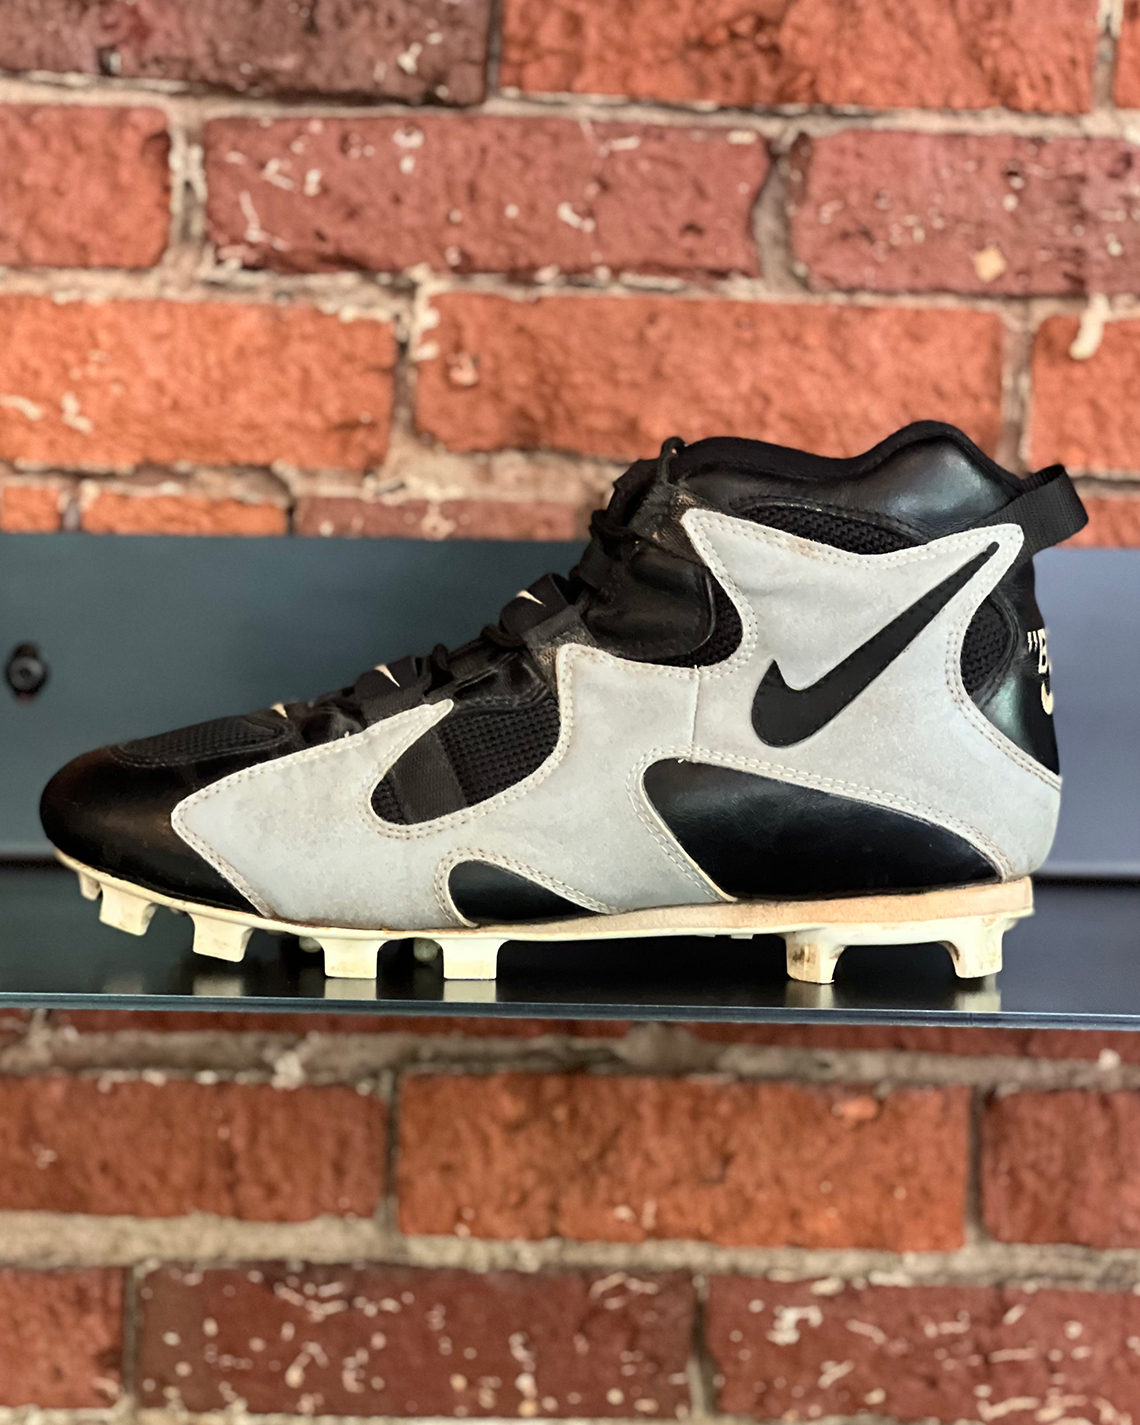 Hometeam Baseball Cleats Display Nike Jay Buhner